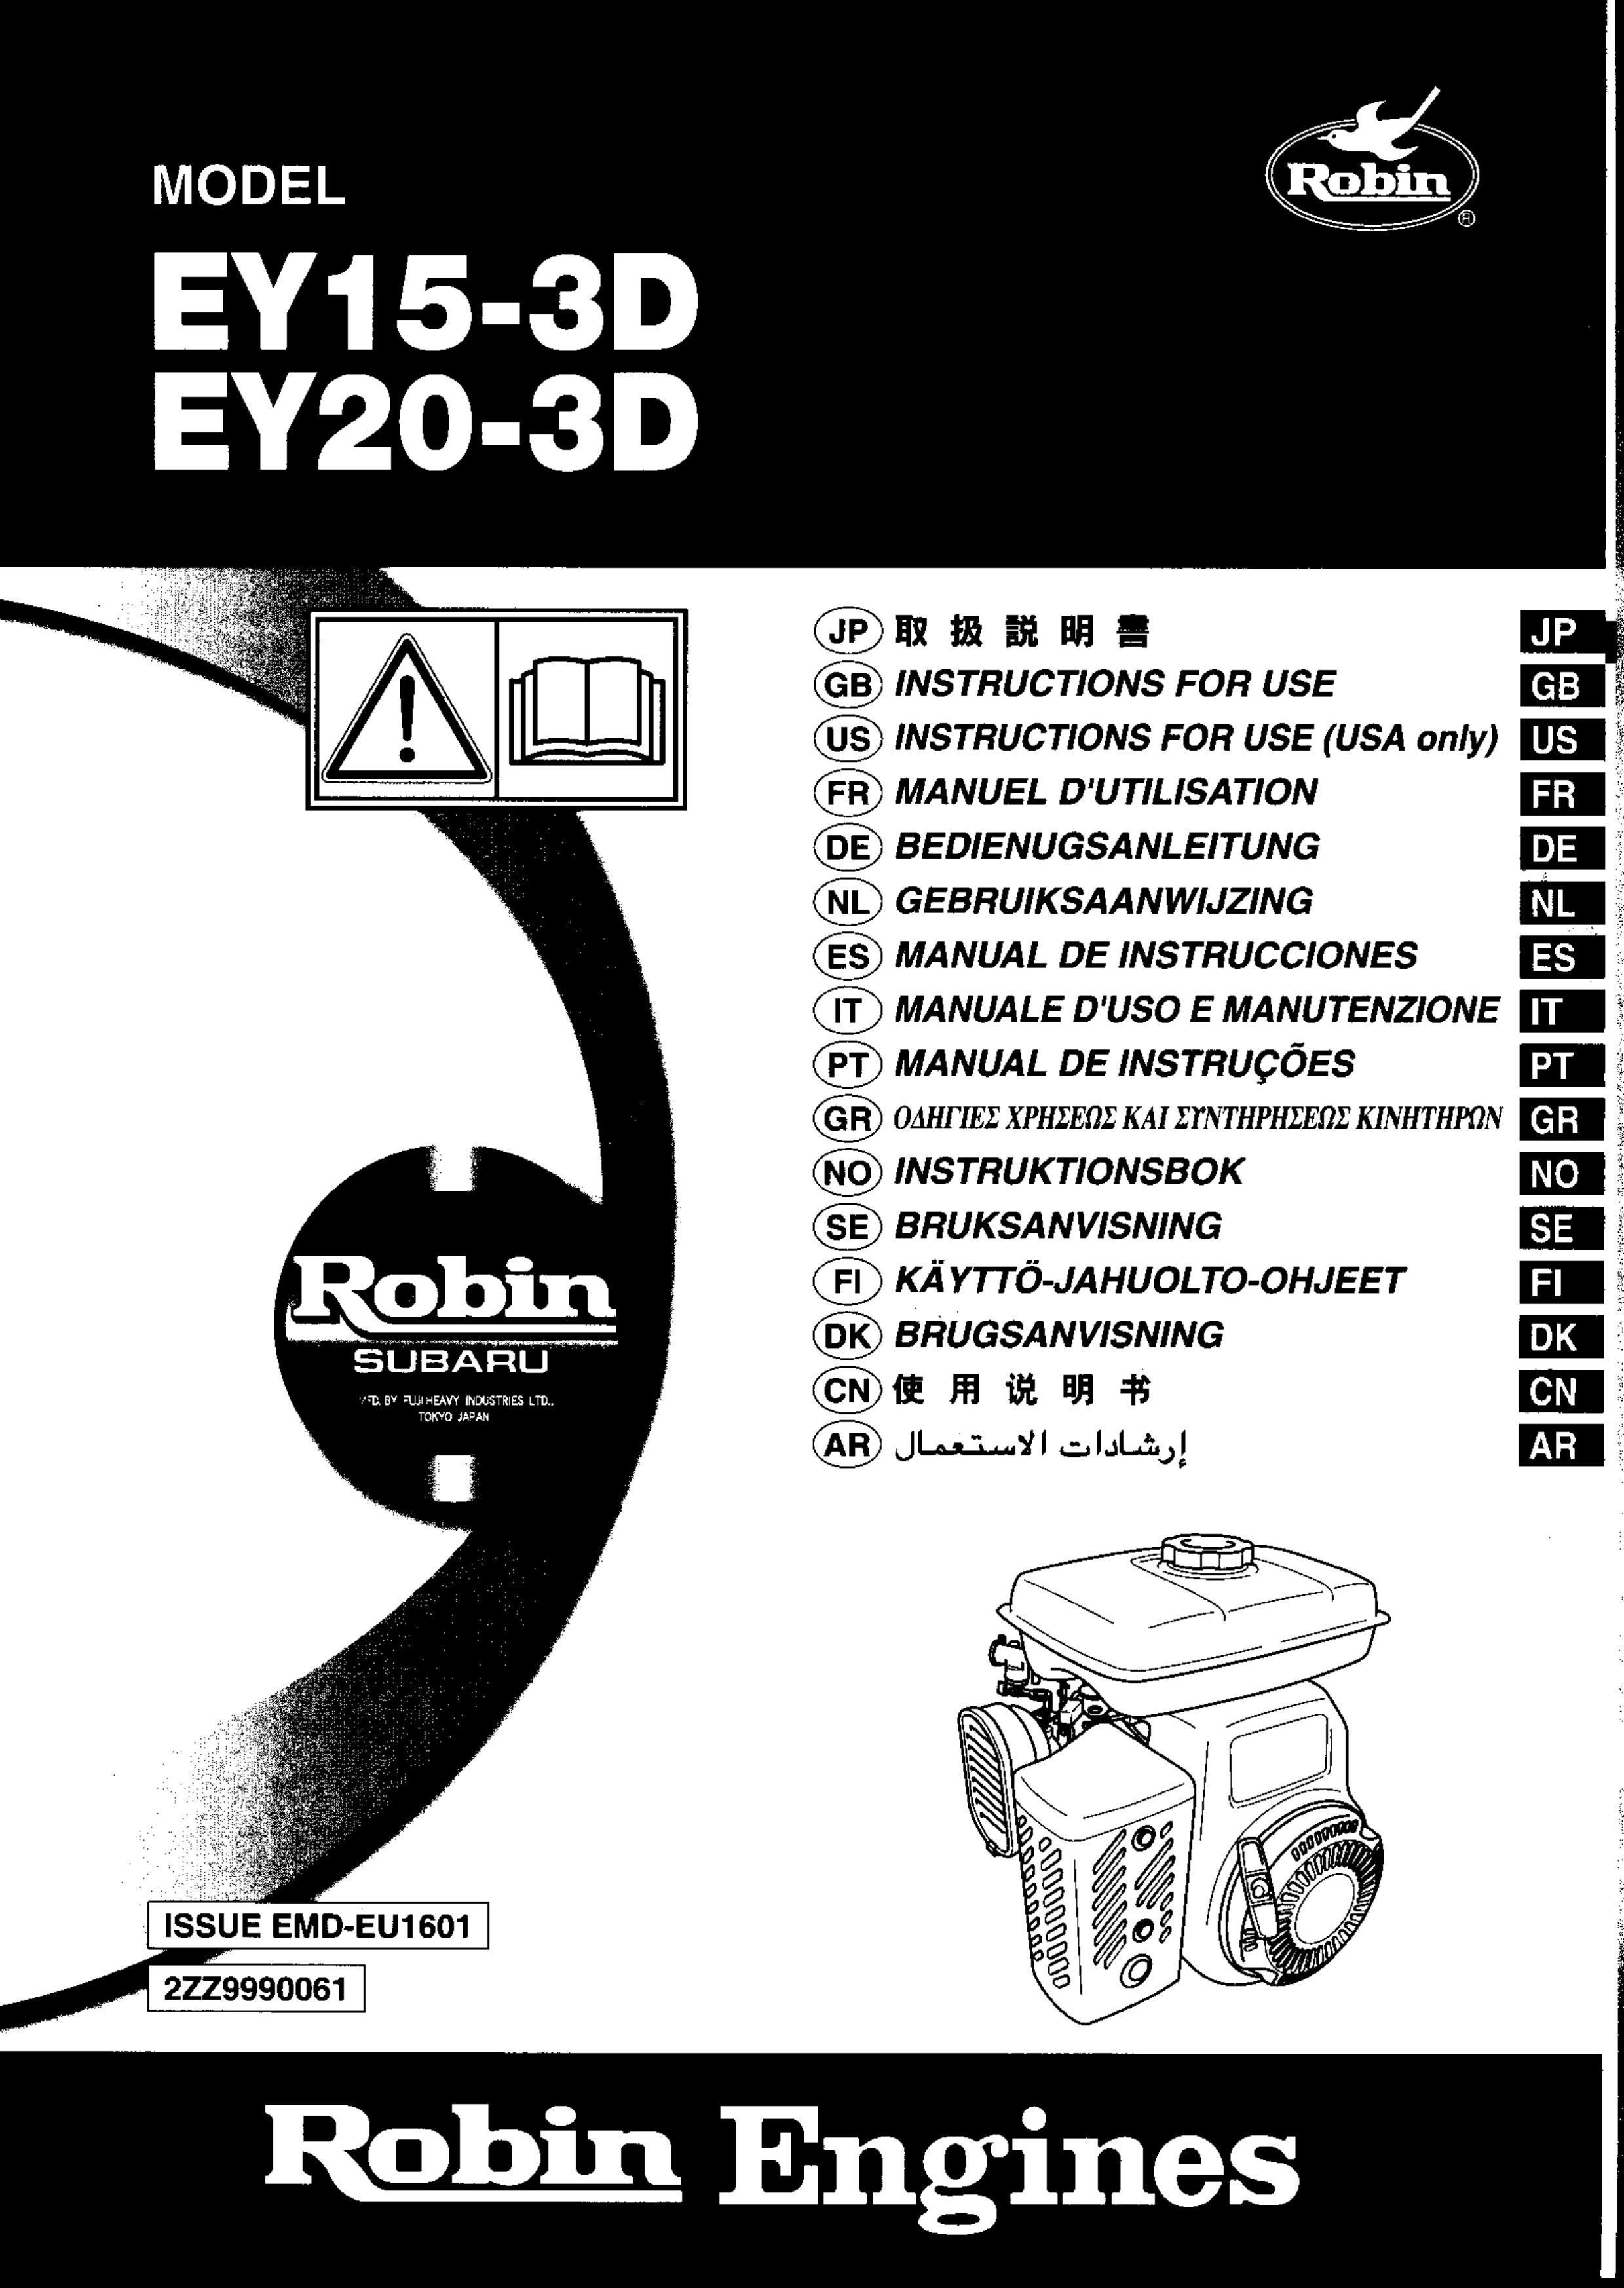 Subaru Robin Power Products EY15-3D Portable Generator User Manual